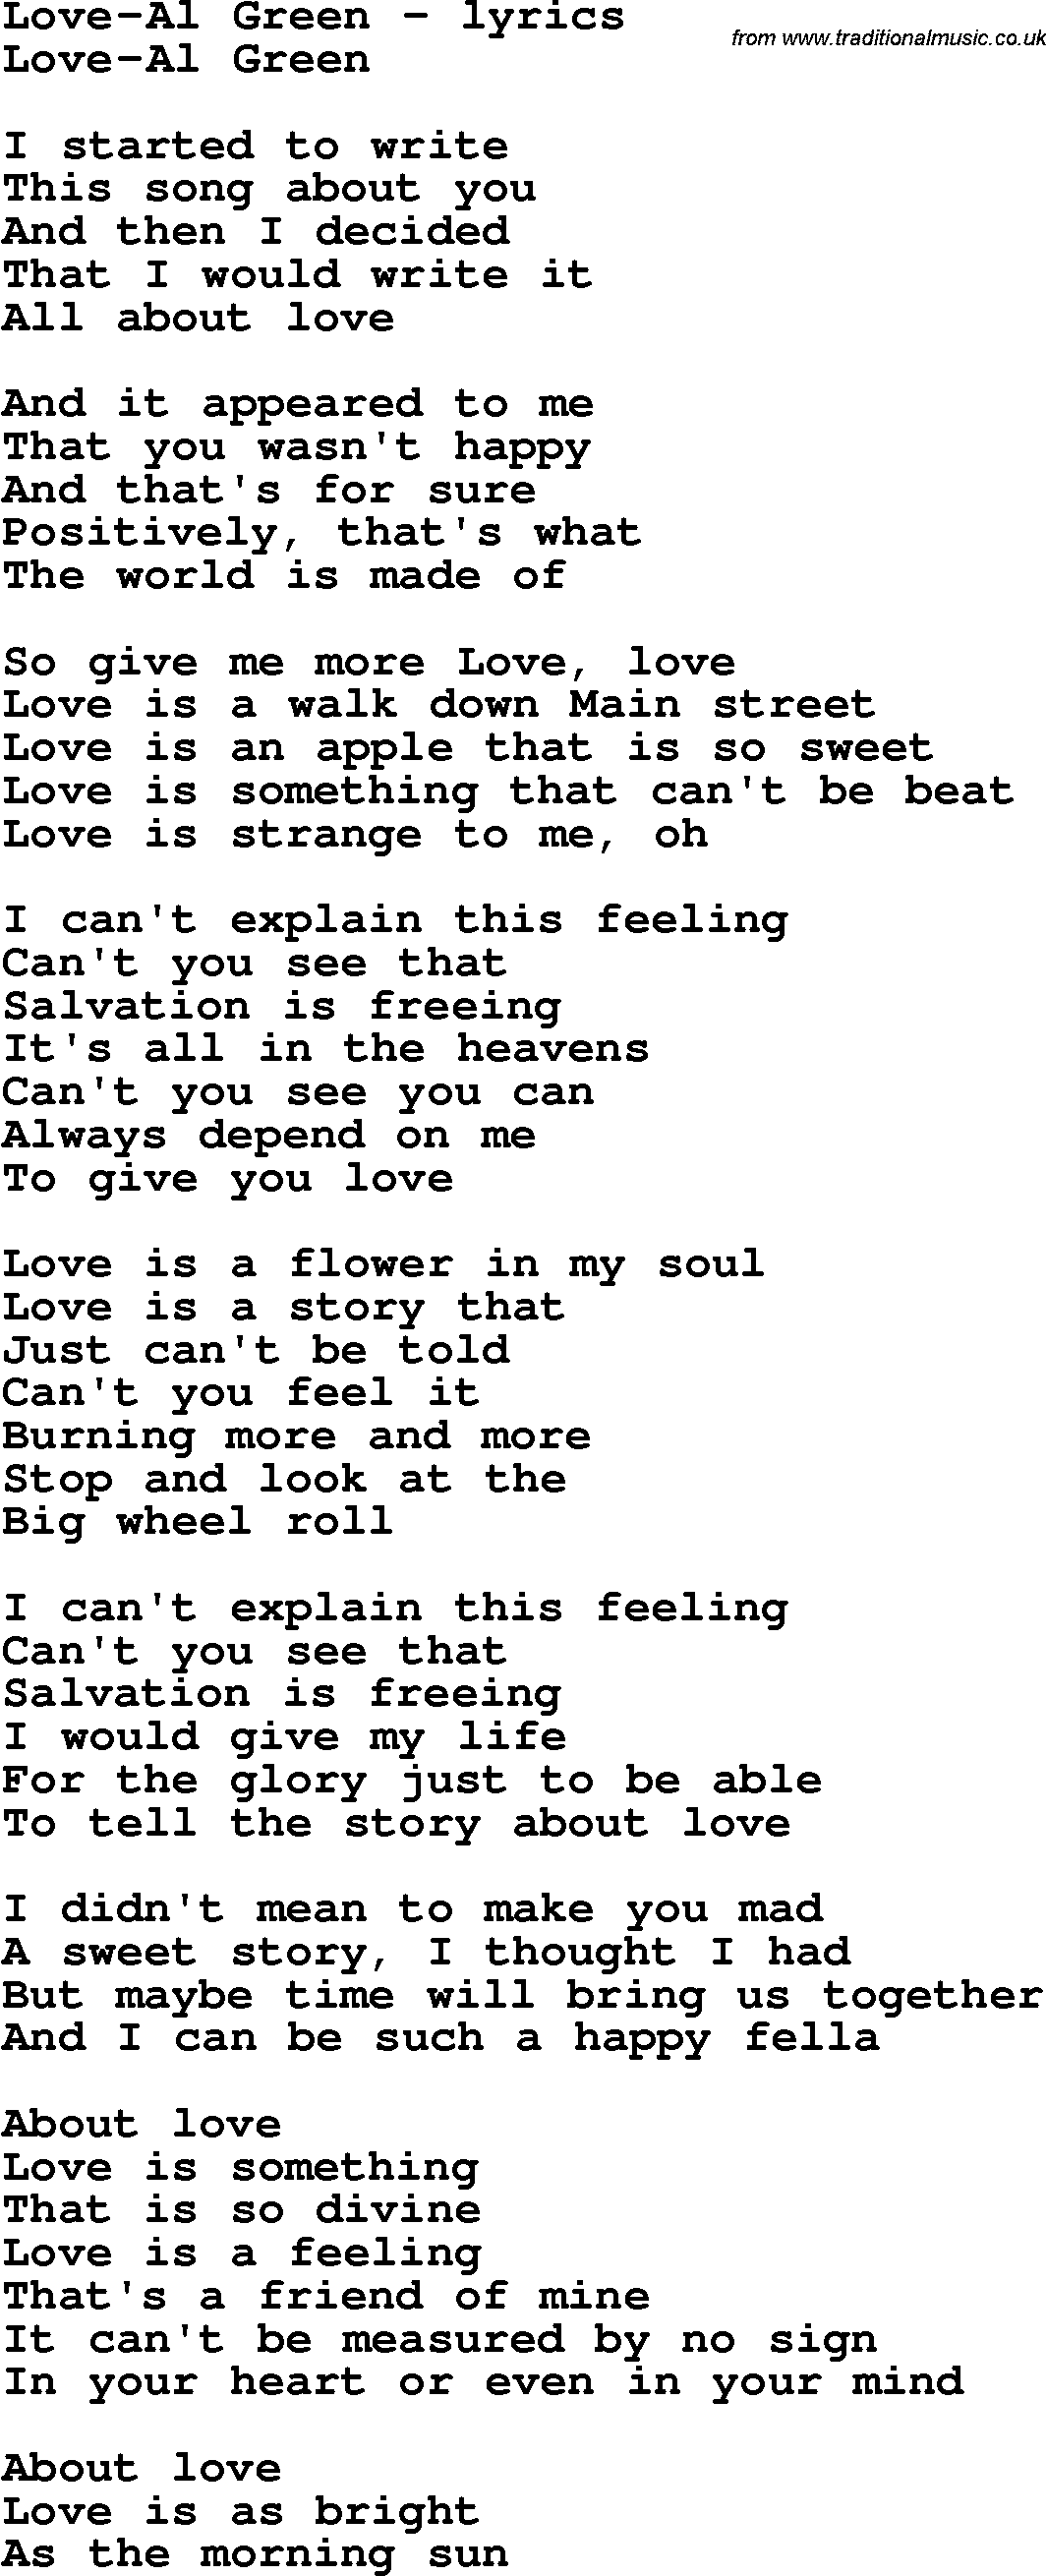 Love Song Lyrics for: Love-Al Green